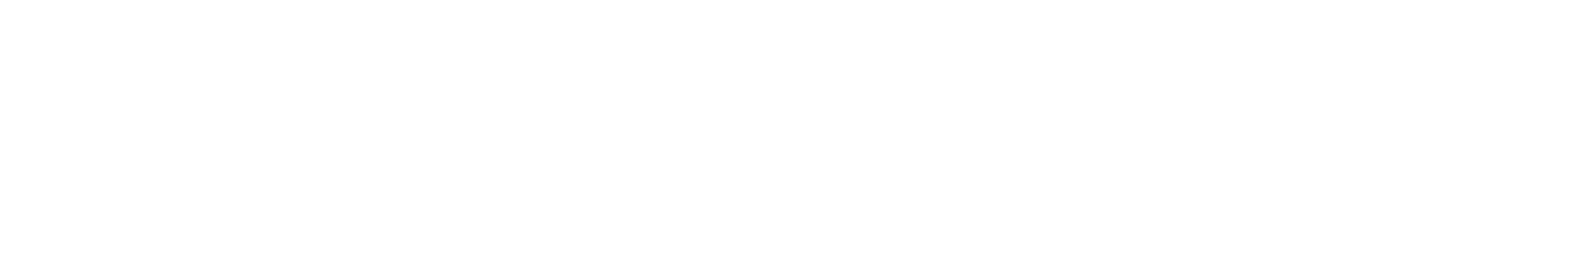 Community Health Systems
 Logo groß für dunkle Hintergründe (transparentes PNG)